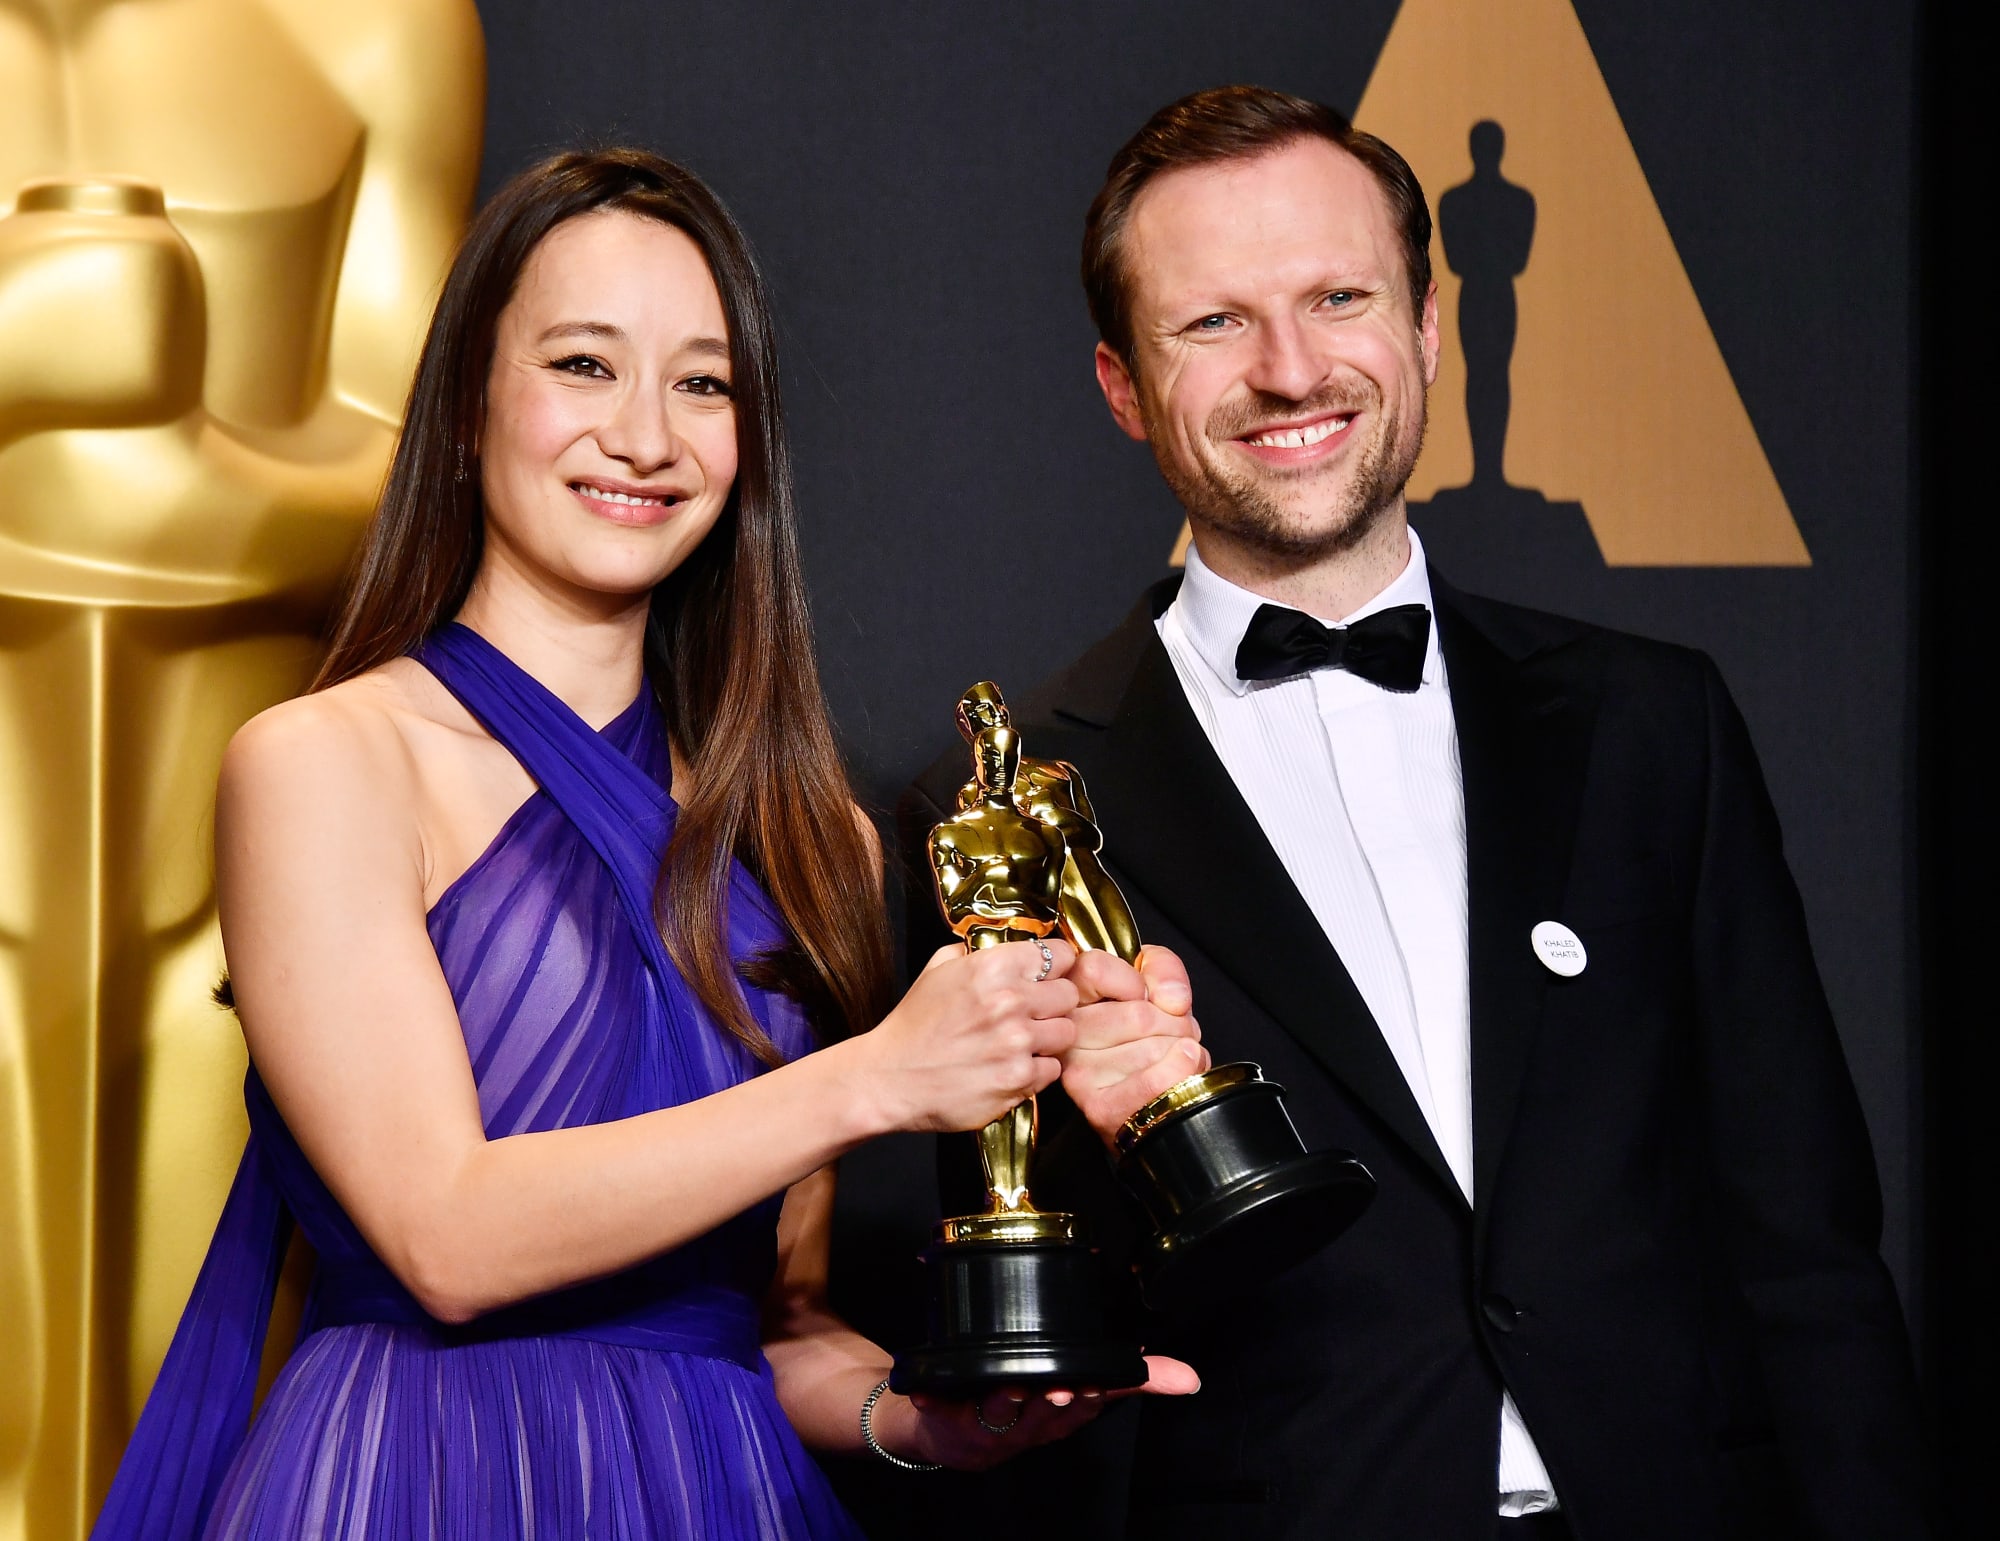 Netflix won their first ever Academy Award at the 2017 Oscars